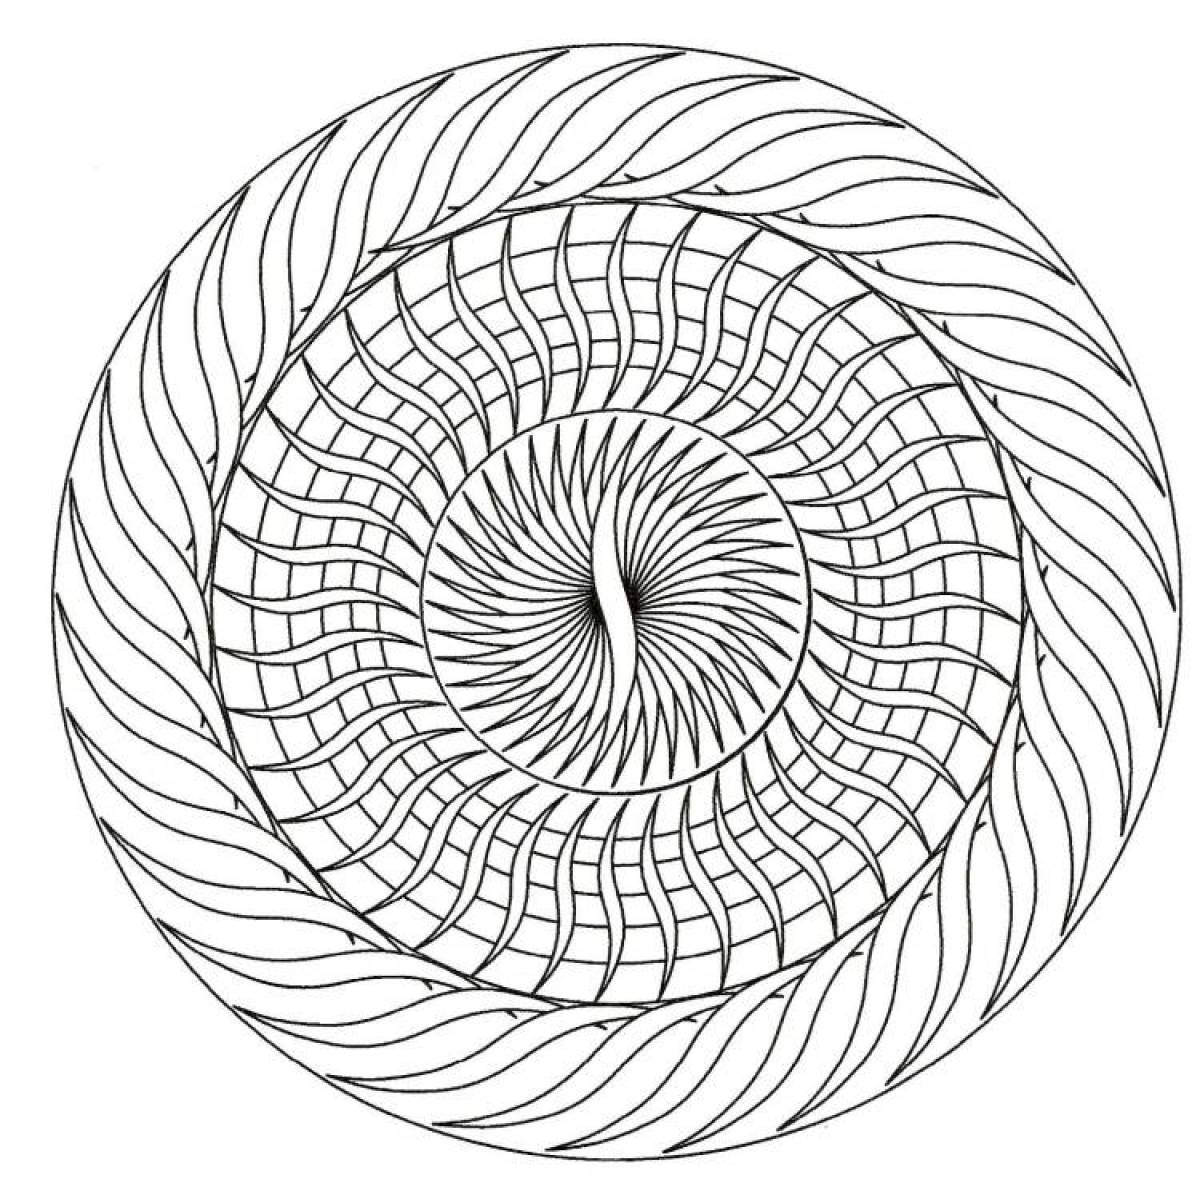 Увлекательная круговая спиральная раскраска